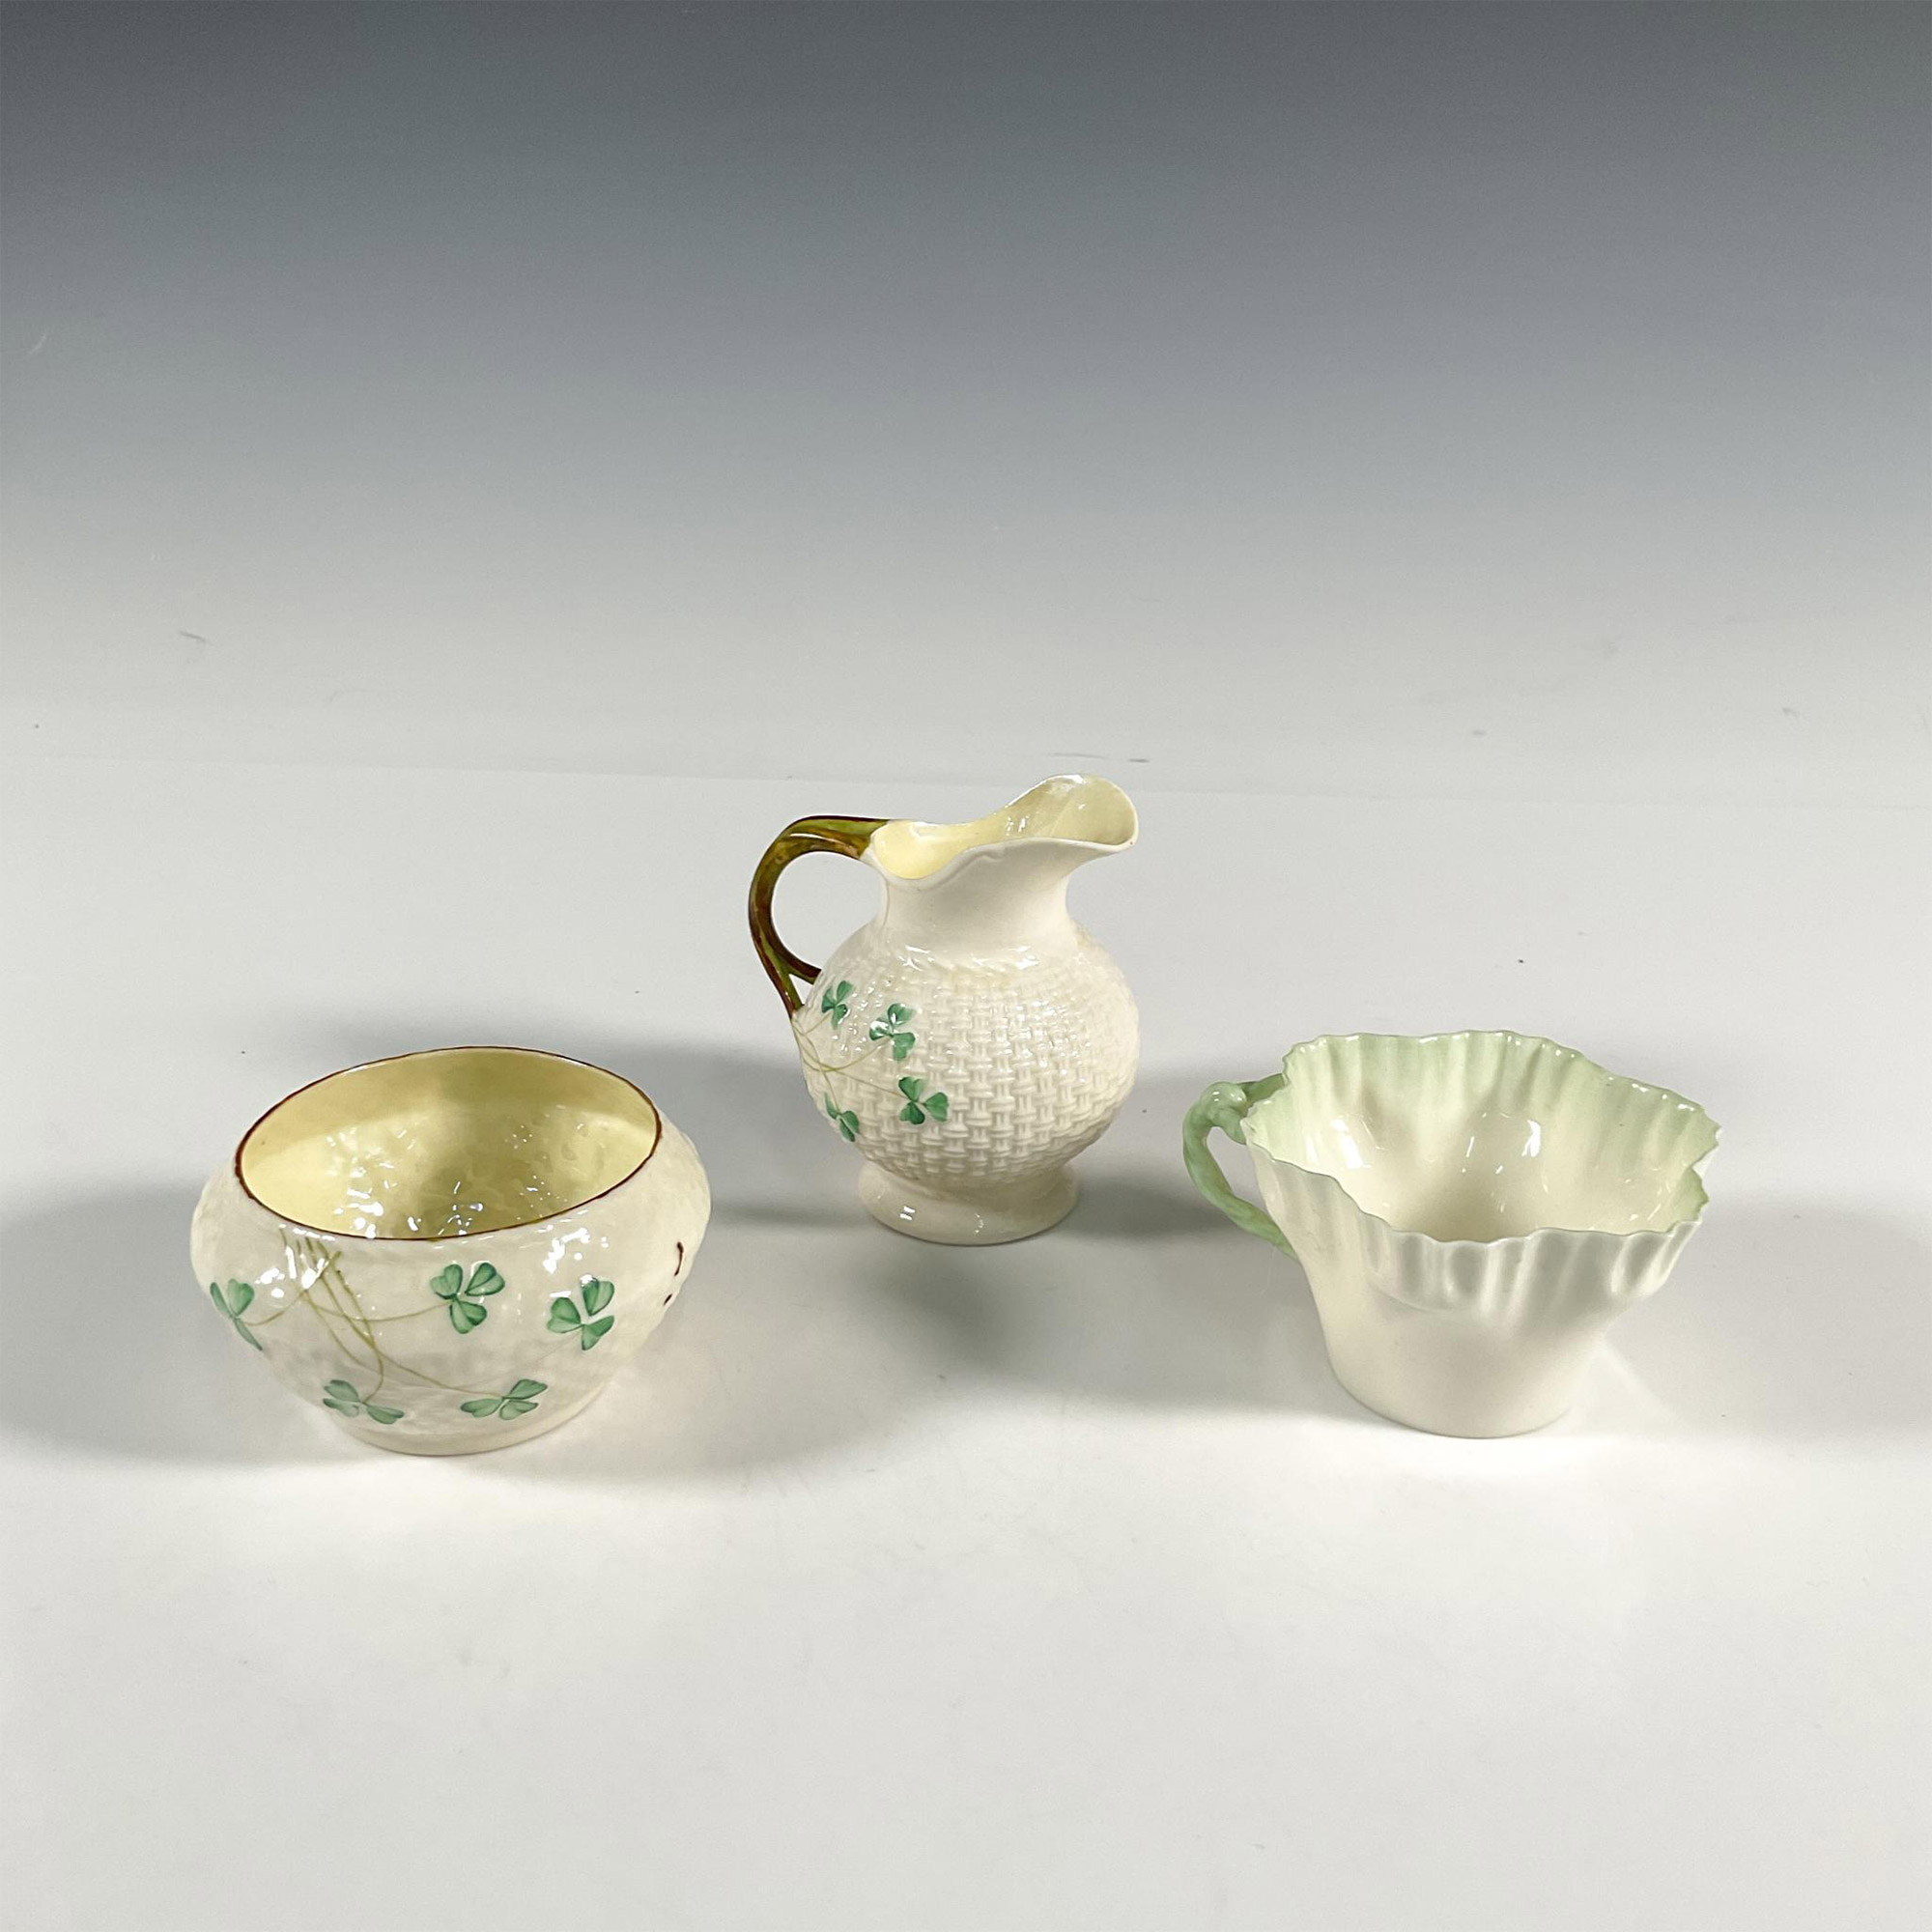 3pc Belleek Porcelain Cup, Creamer, and Sugar Bowl - Image 2 of 4